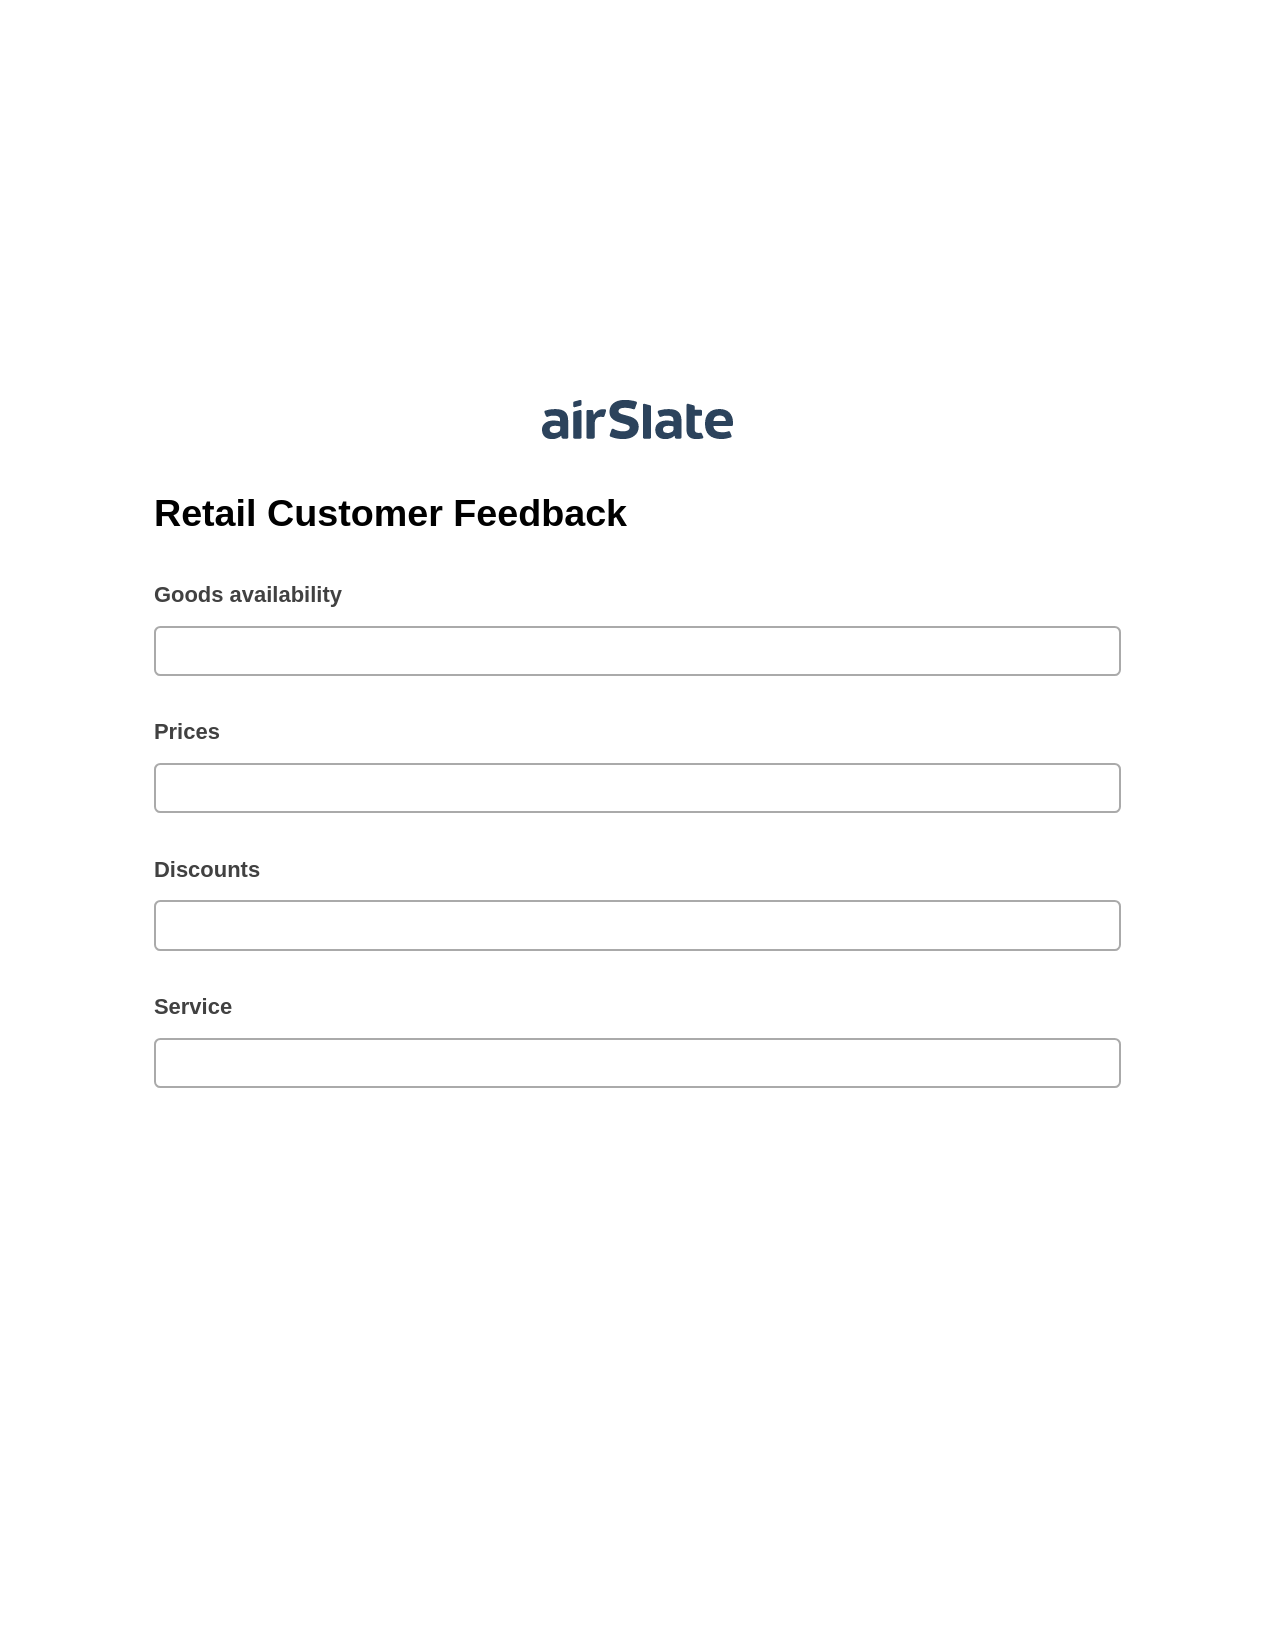 Retail Customer Feedback Pre-fill from CSV File Bot, SendGrid send Campaign bot, Dropbox Bot